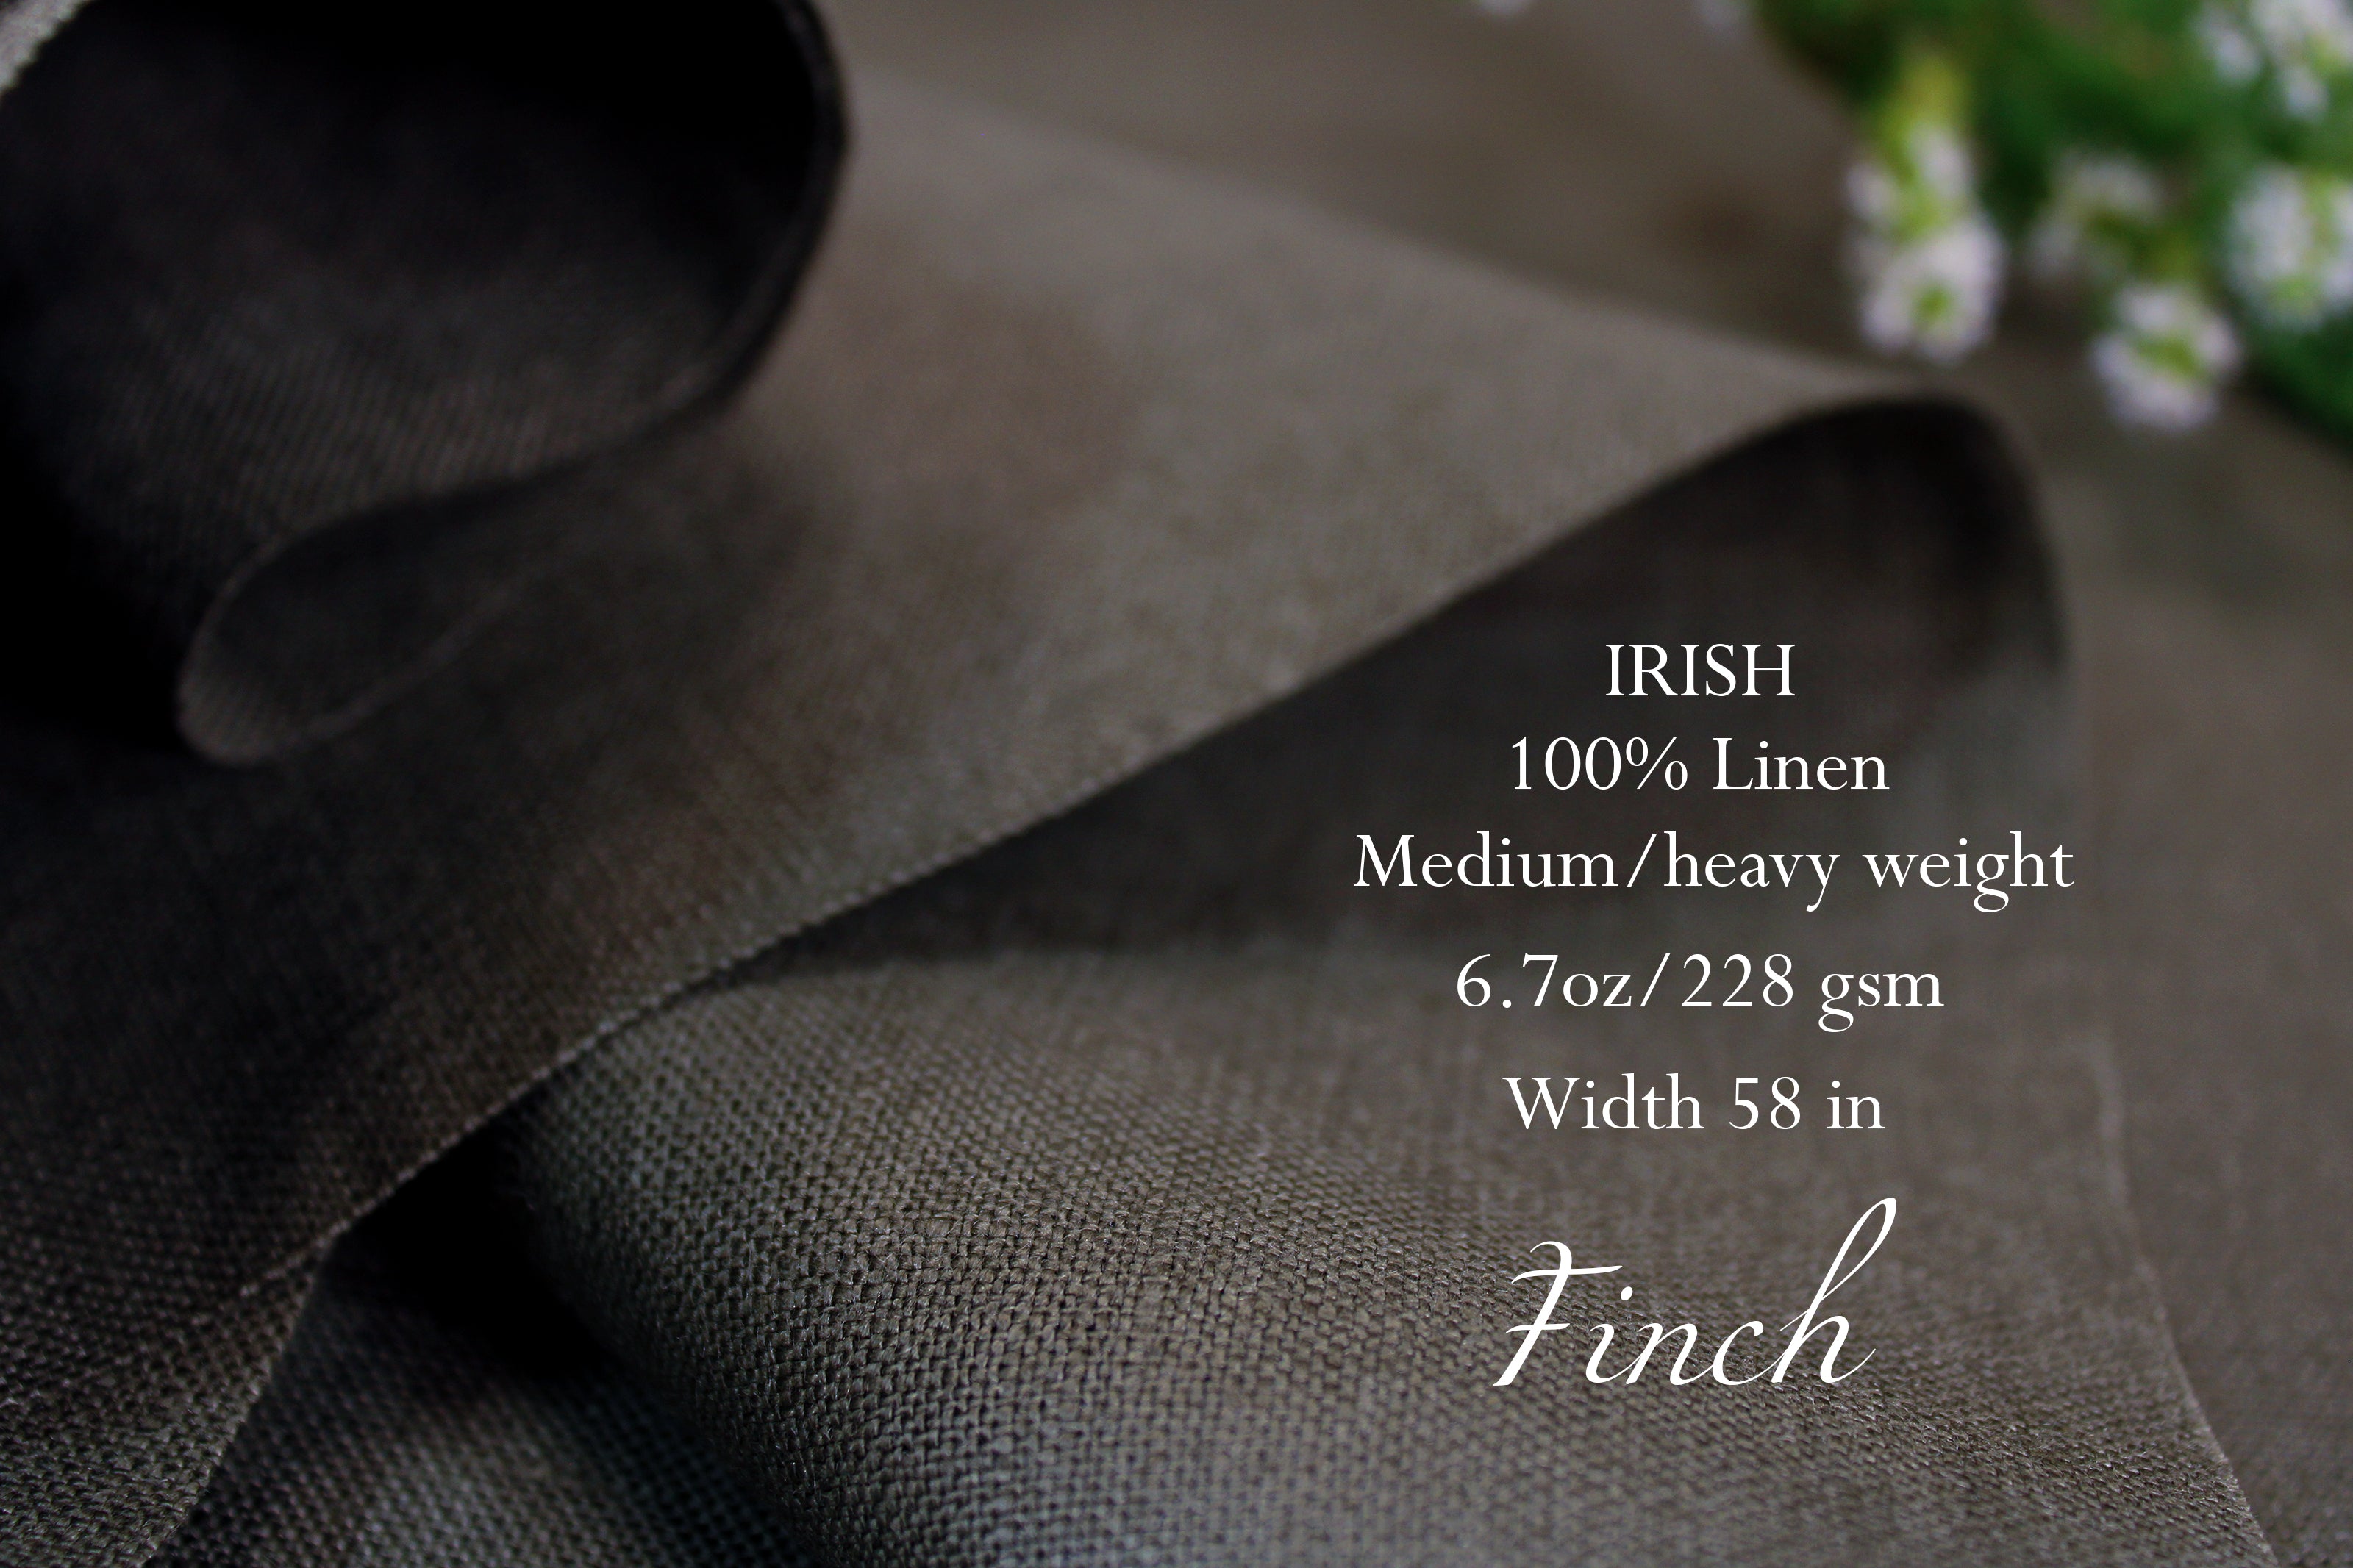 Premium IRISH 100% Linen Fabric by the Yard / Finch Linen Fabric / Buy Linen Online